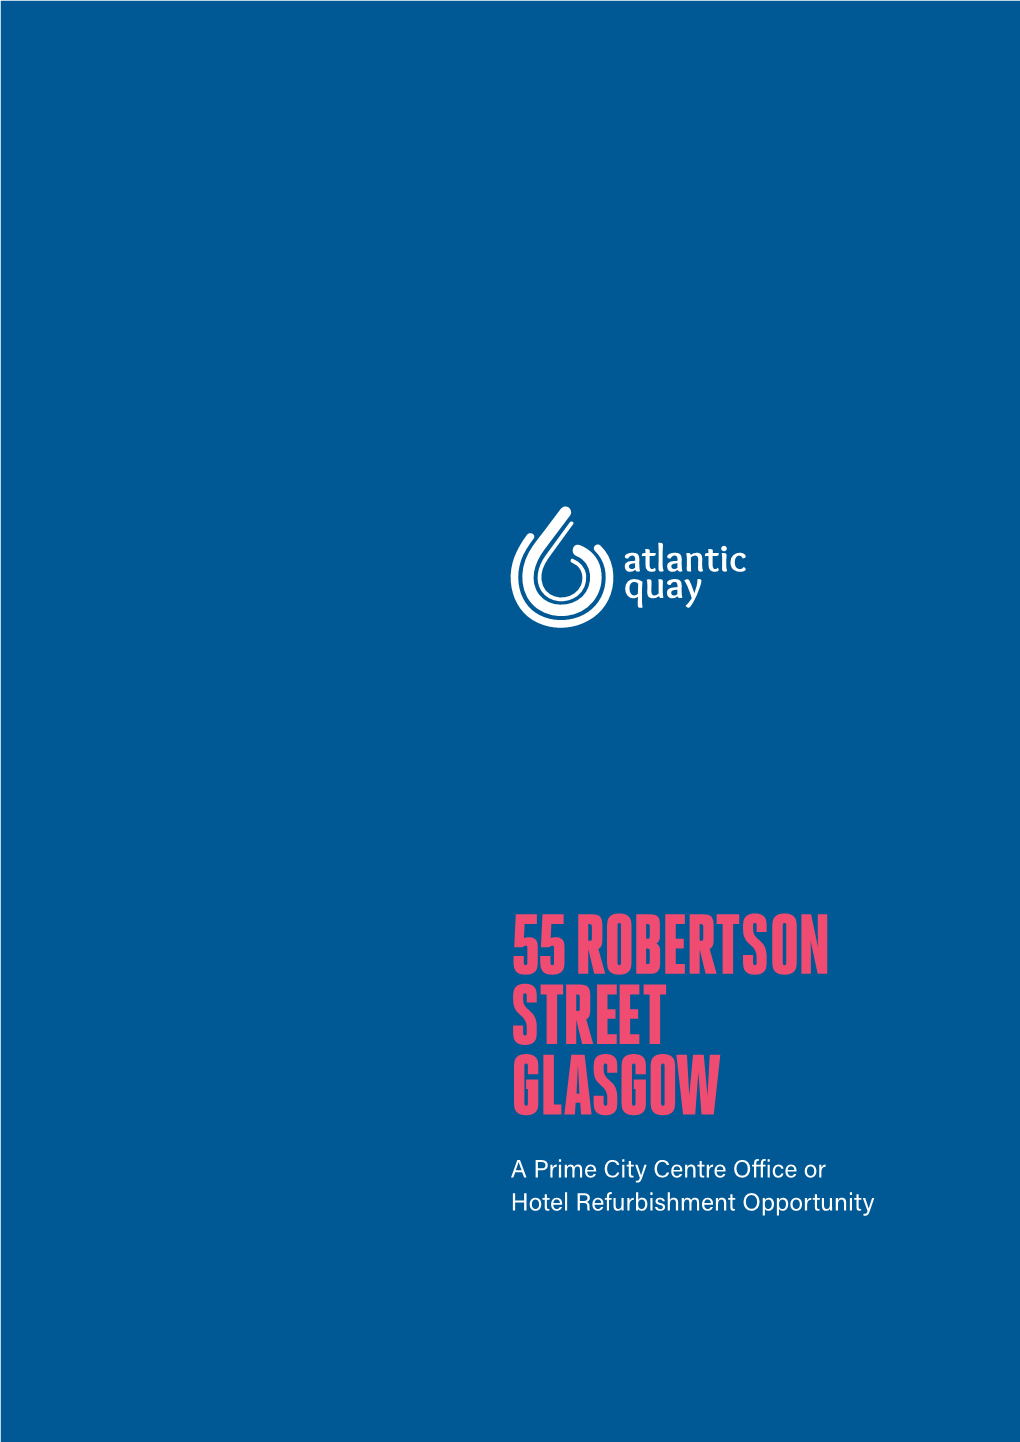 55 Robertson Street Glasgow